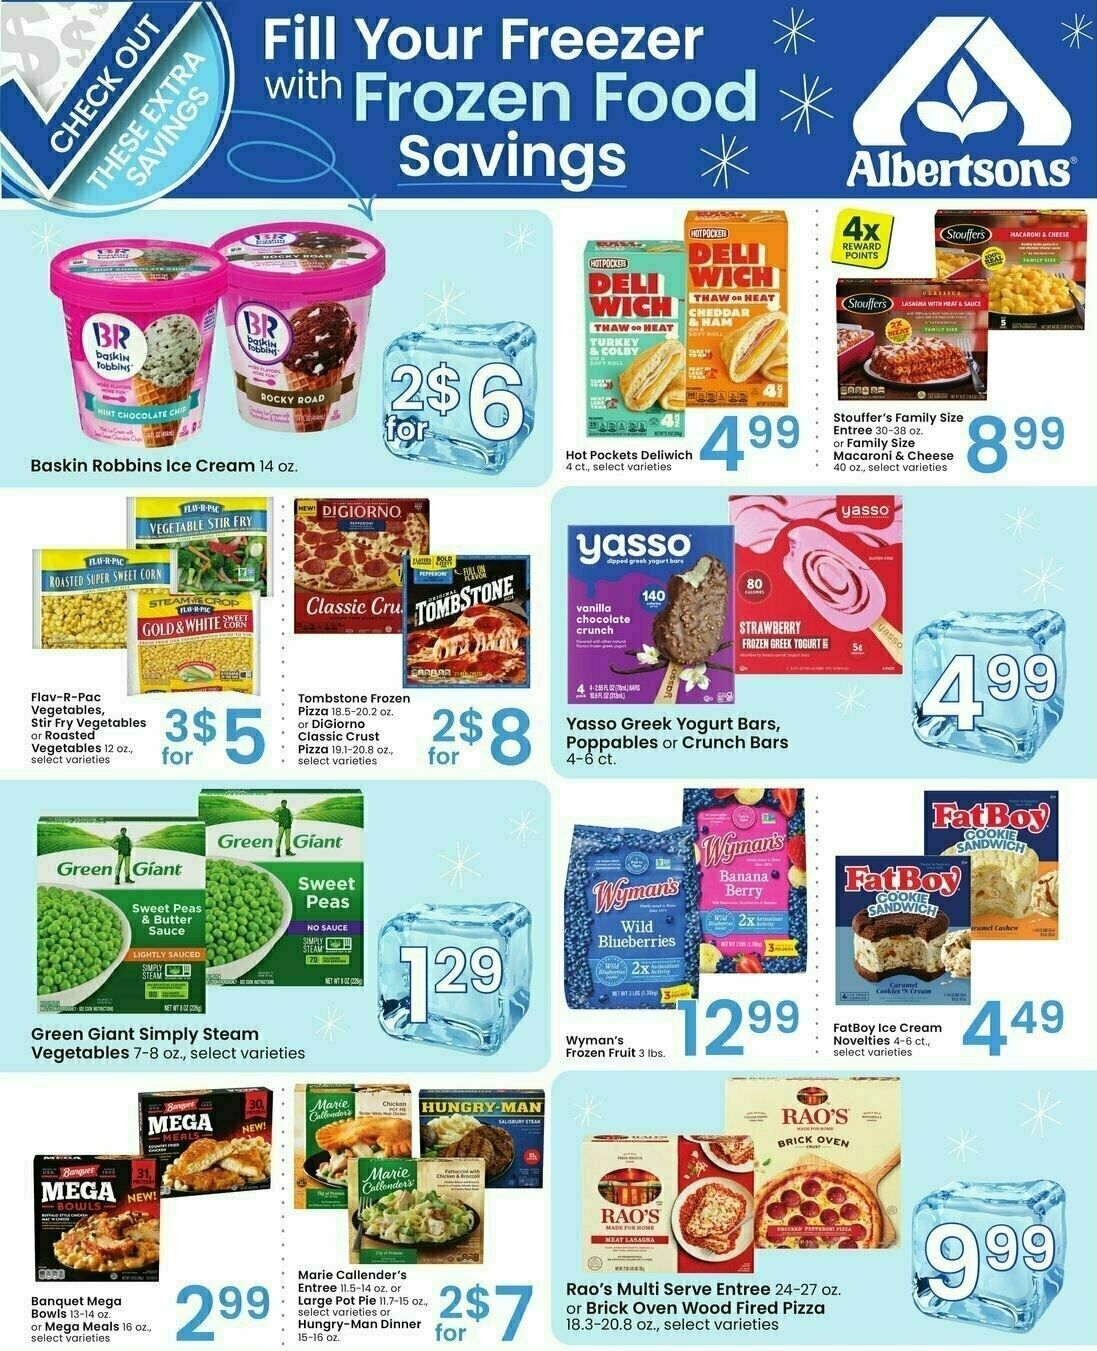 Albertsons Bonus Savings Weekly Ad from March 6